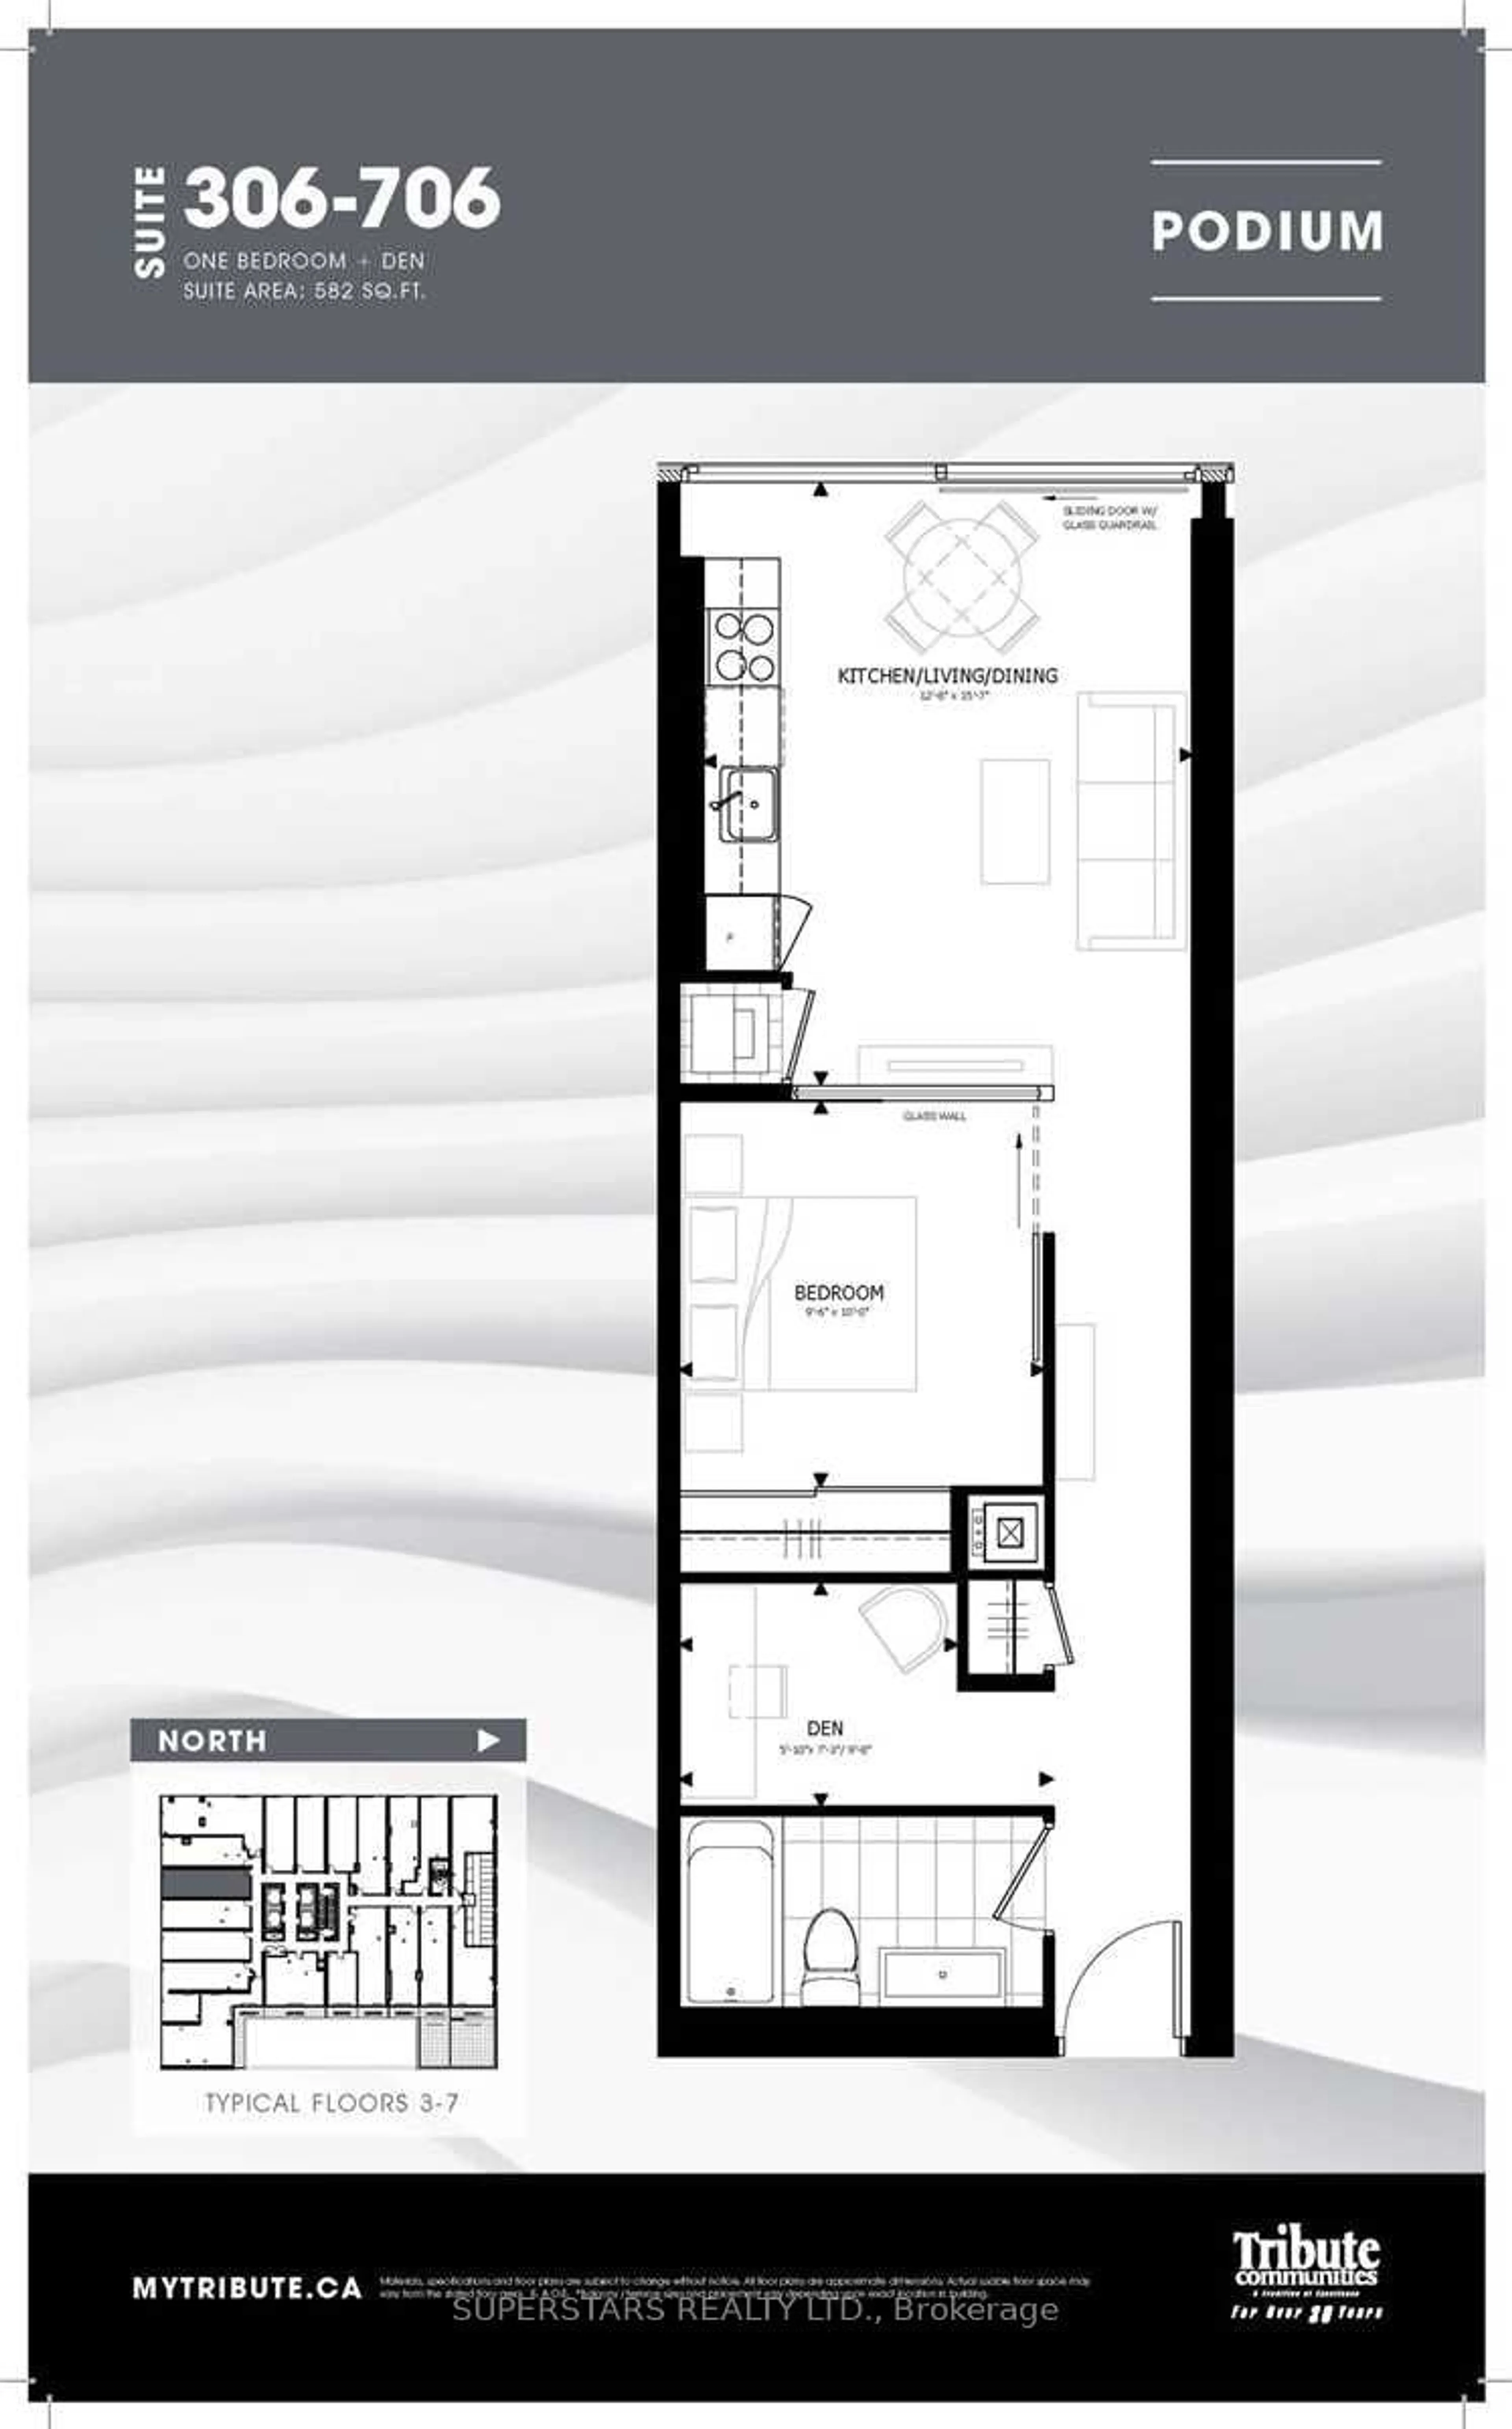 Floor plan for 403 Church St #306, Toronto Ontario M4Y 0C9